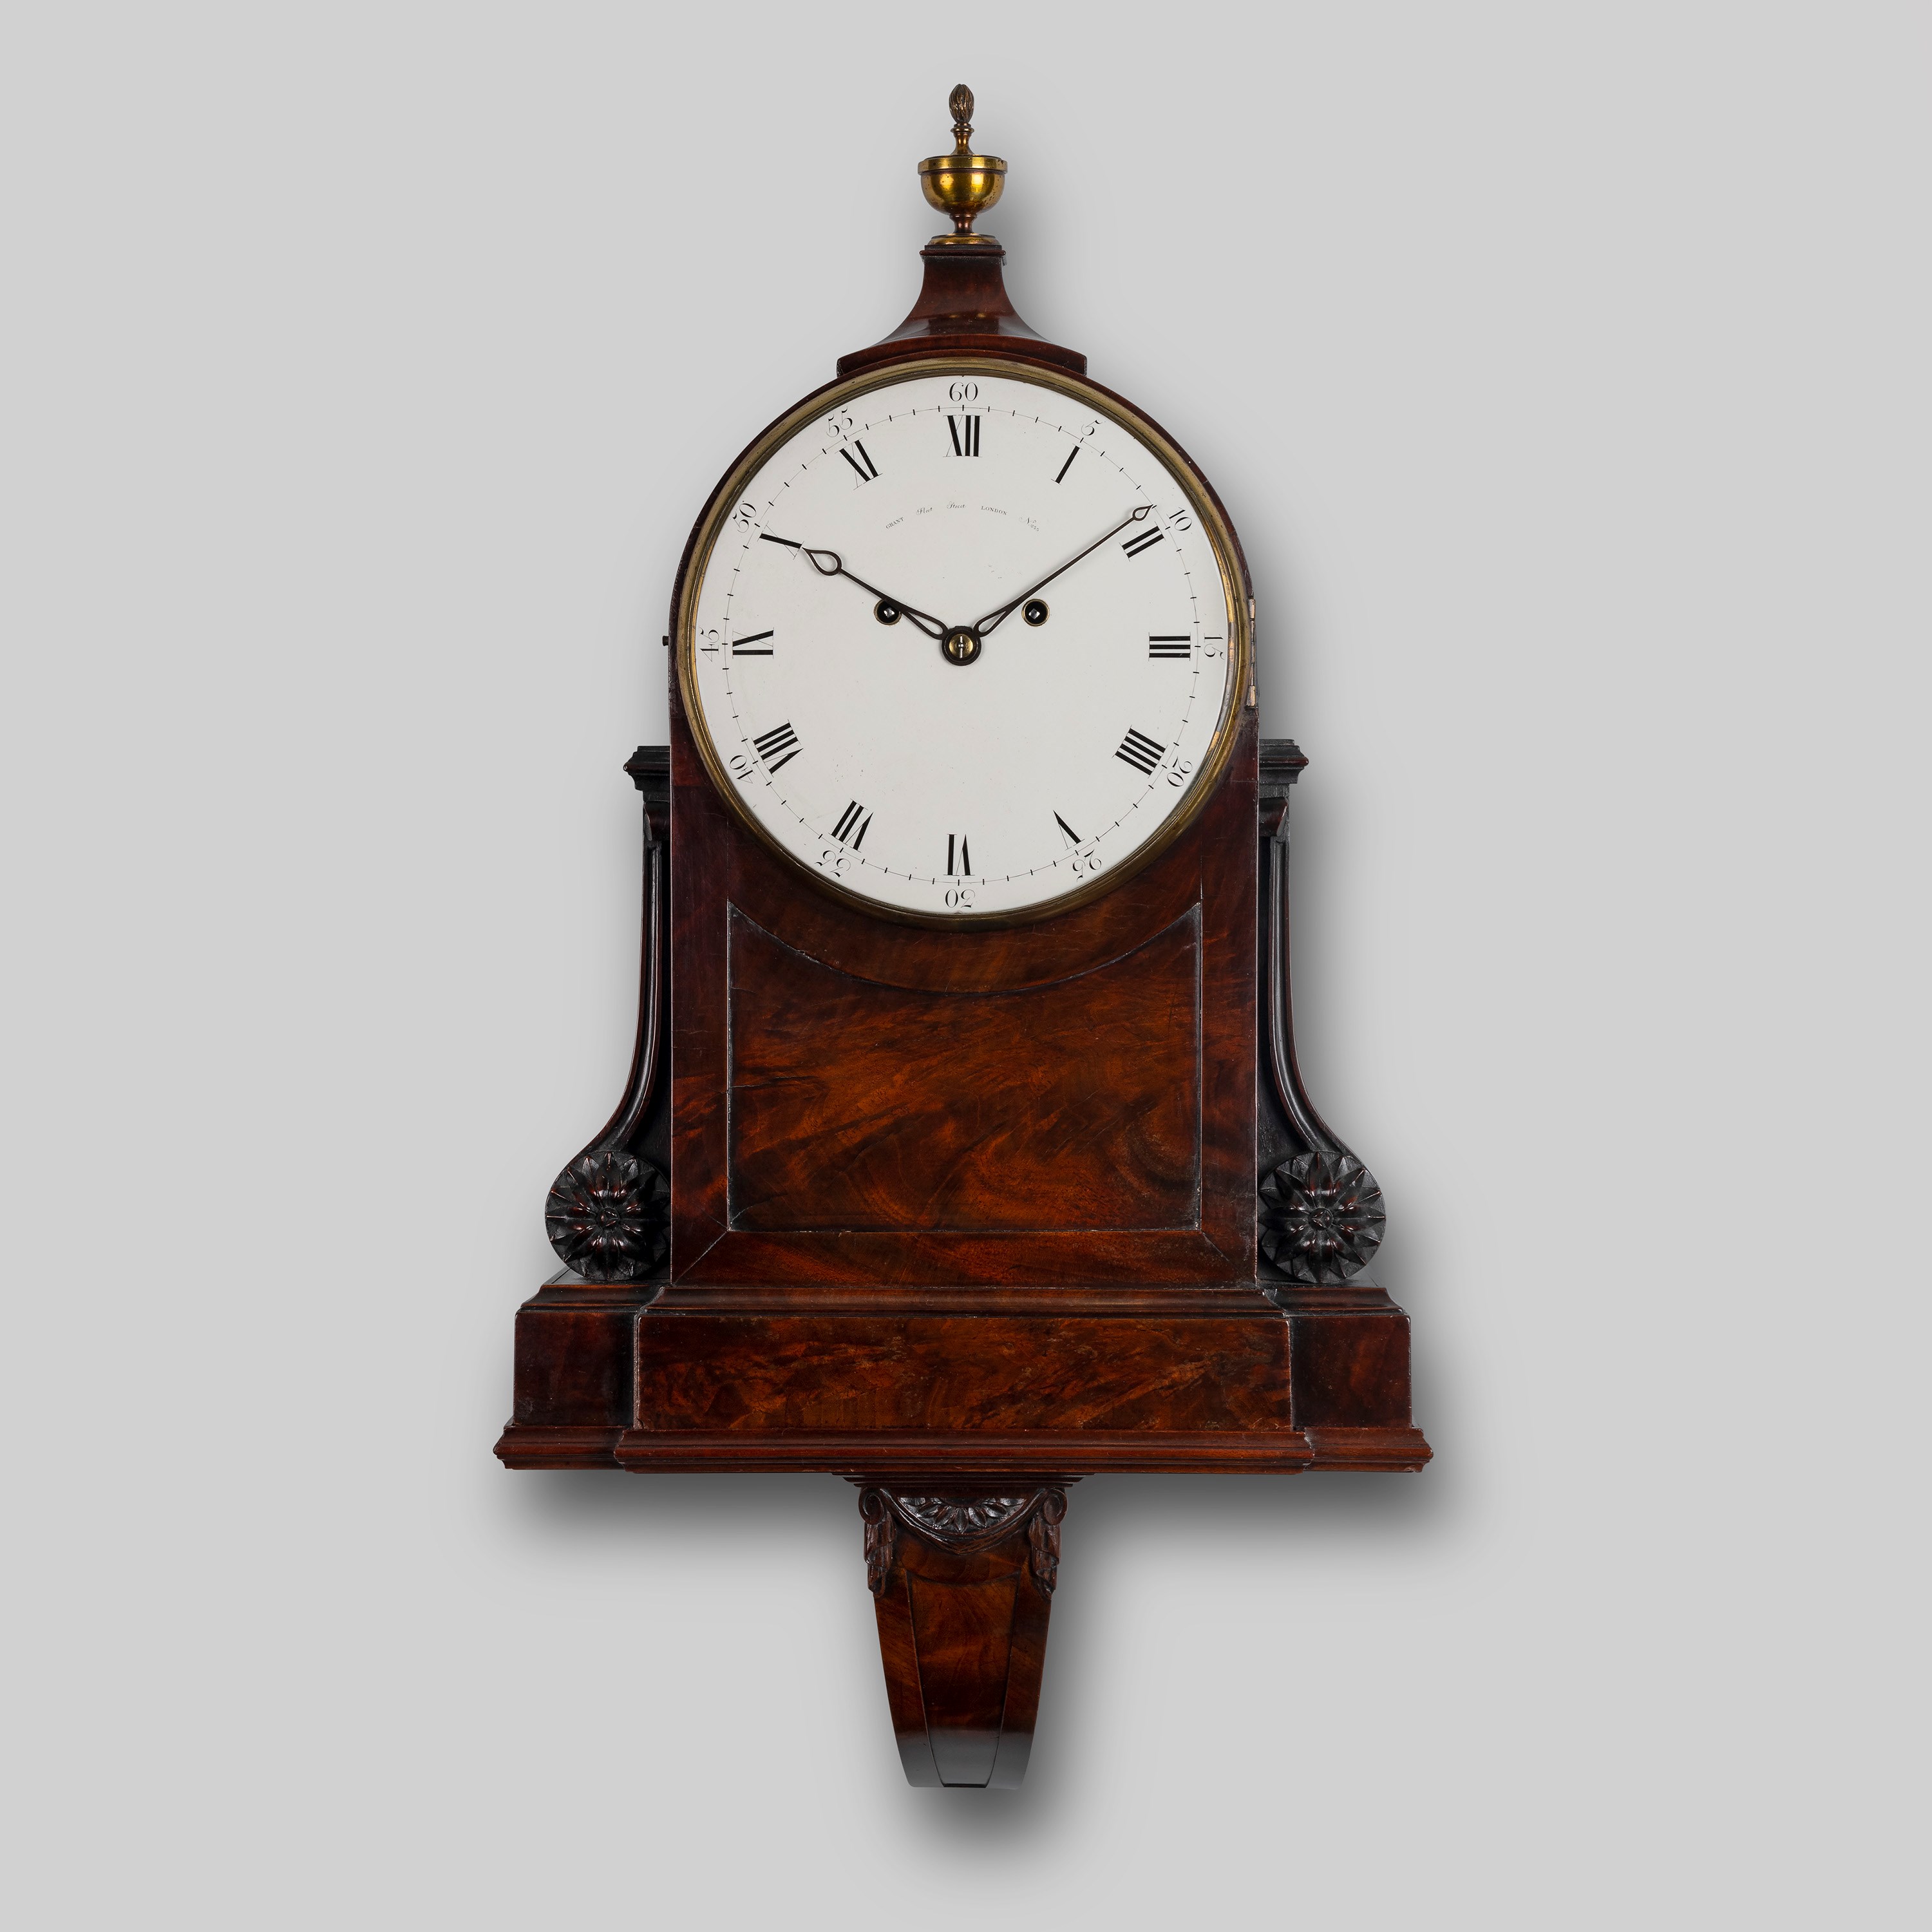 Bracket Clock by Grant of London, circa 1800